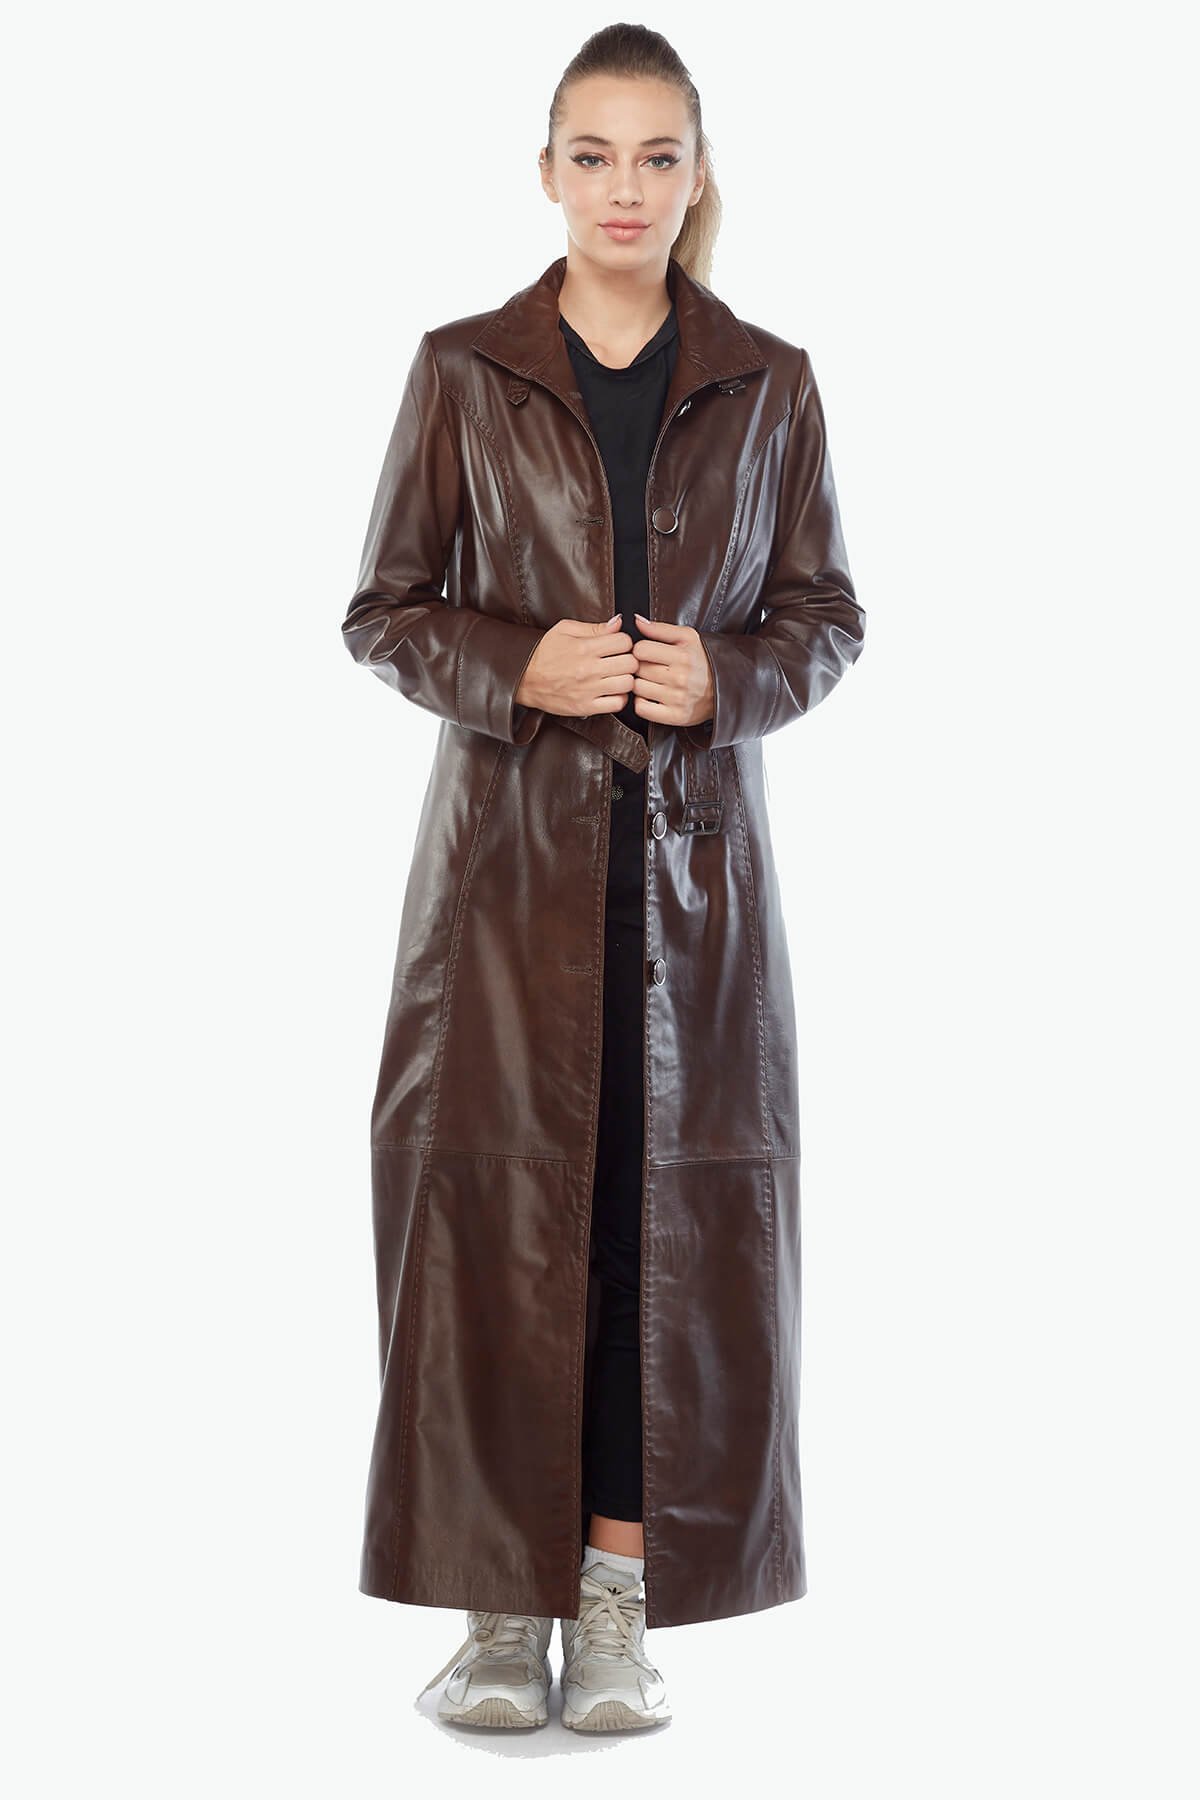 Genuine Leather Women's Topcoat Brown